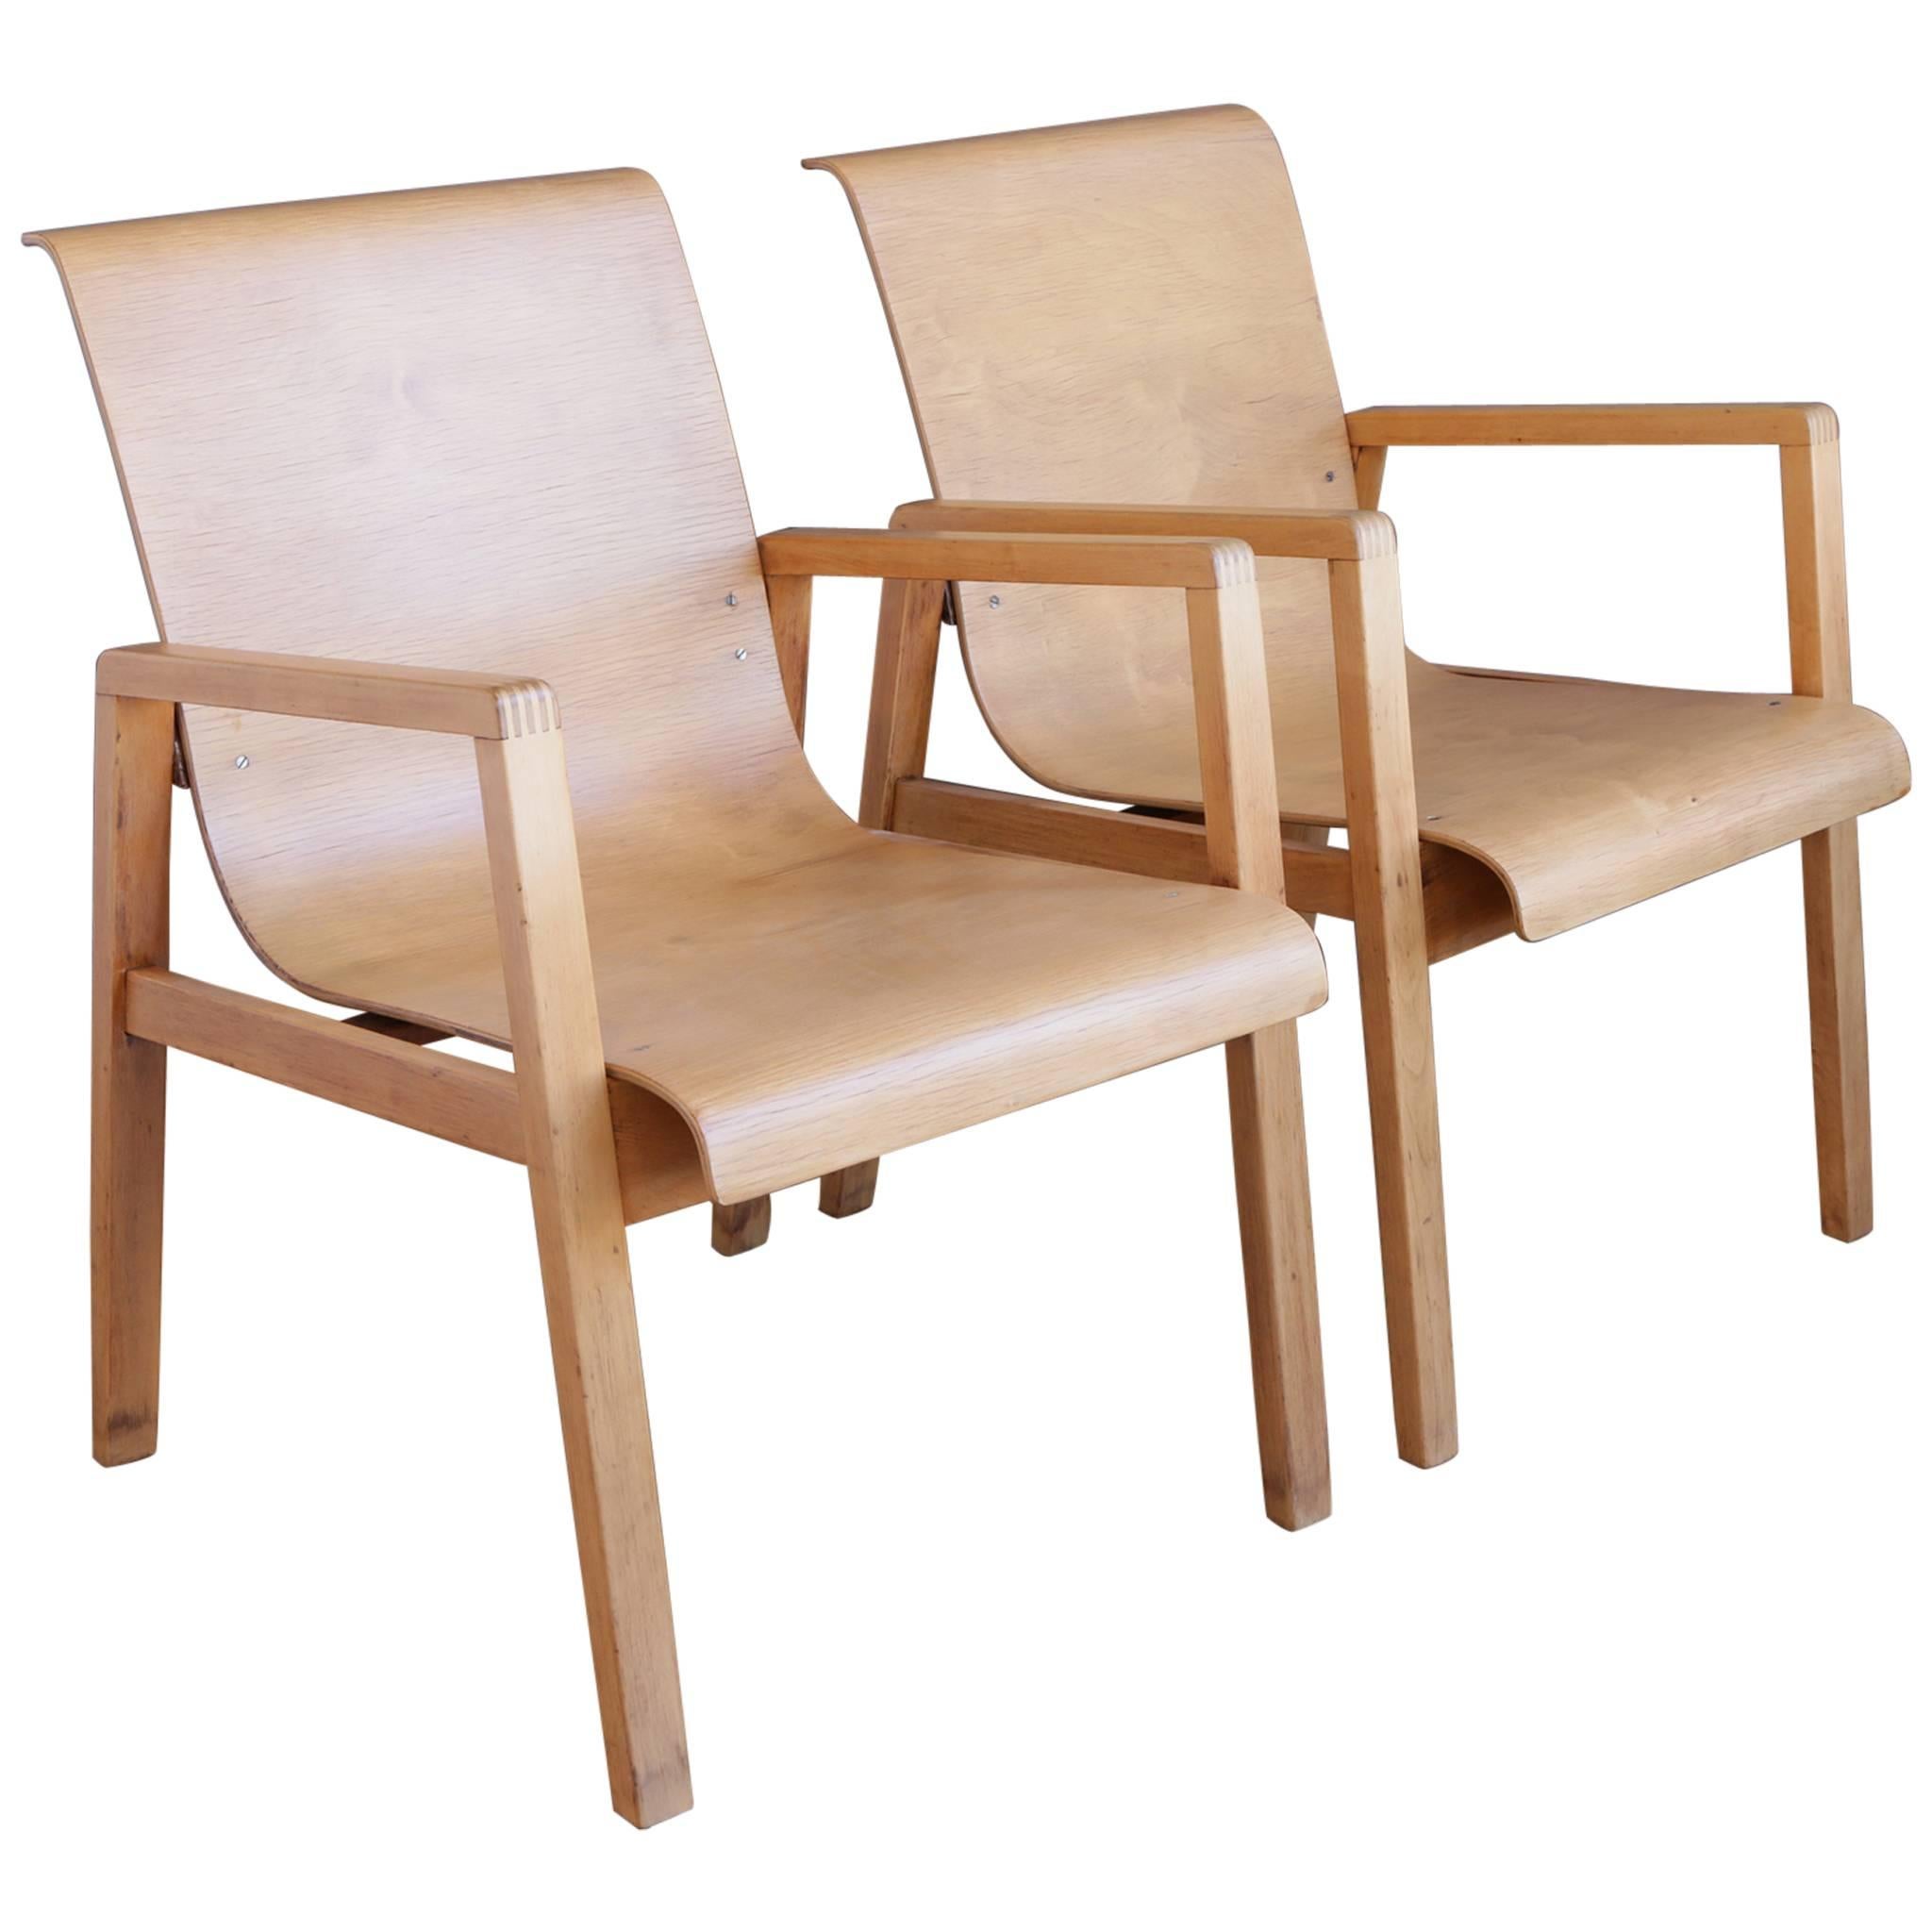 Pair of "Model 51" Armchairs by Alvar Aalto